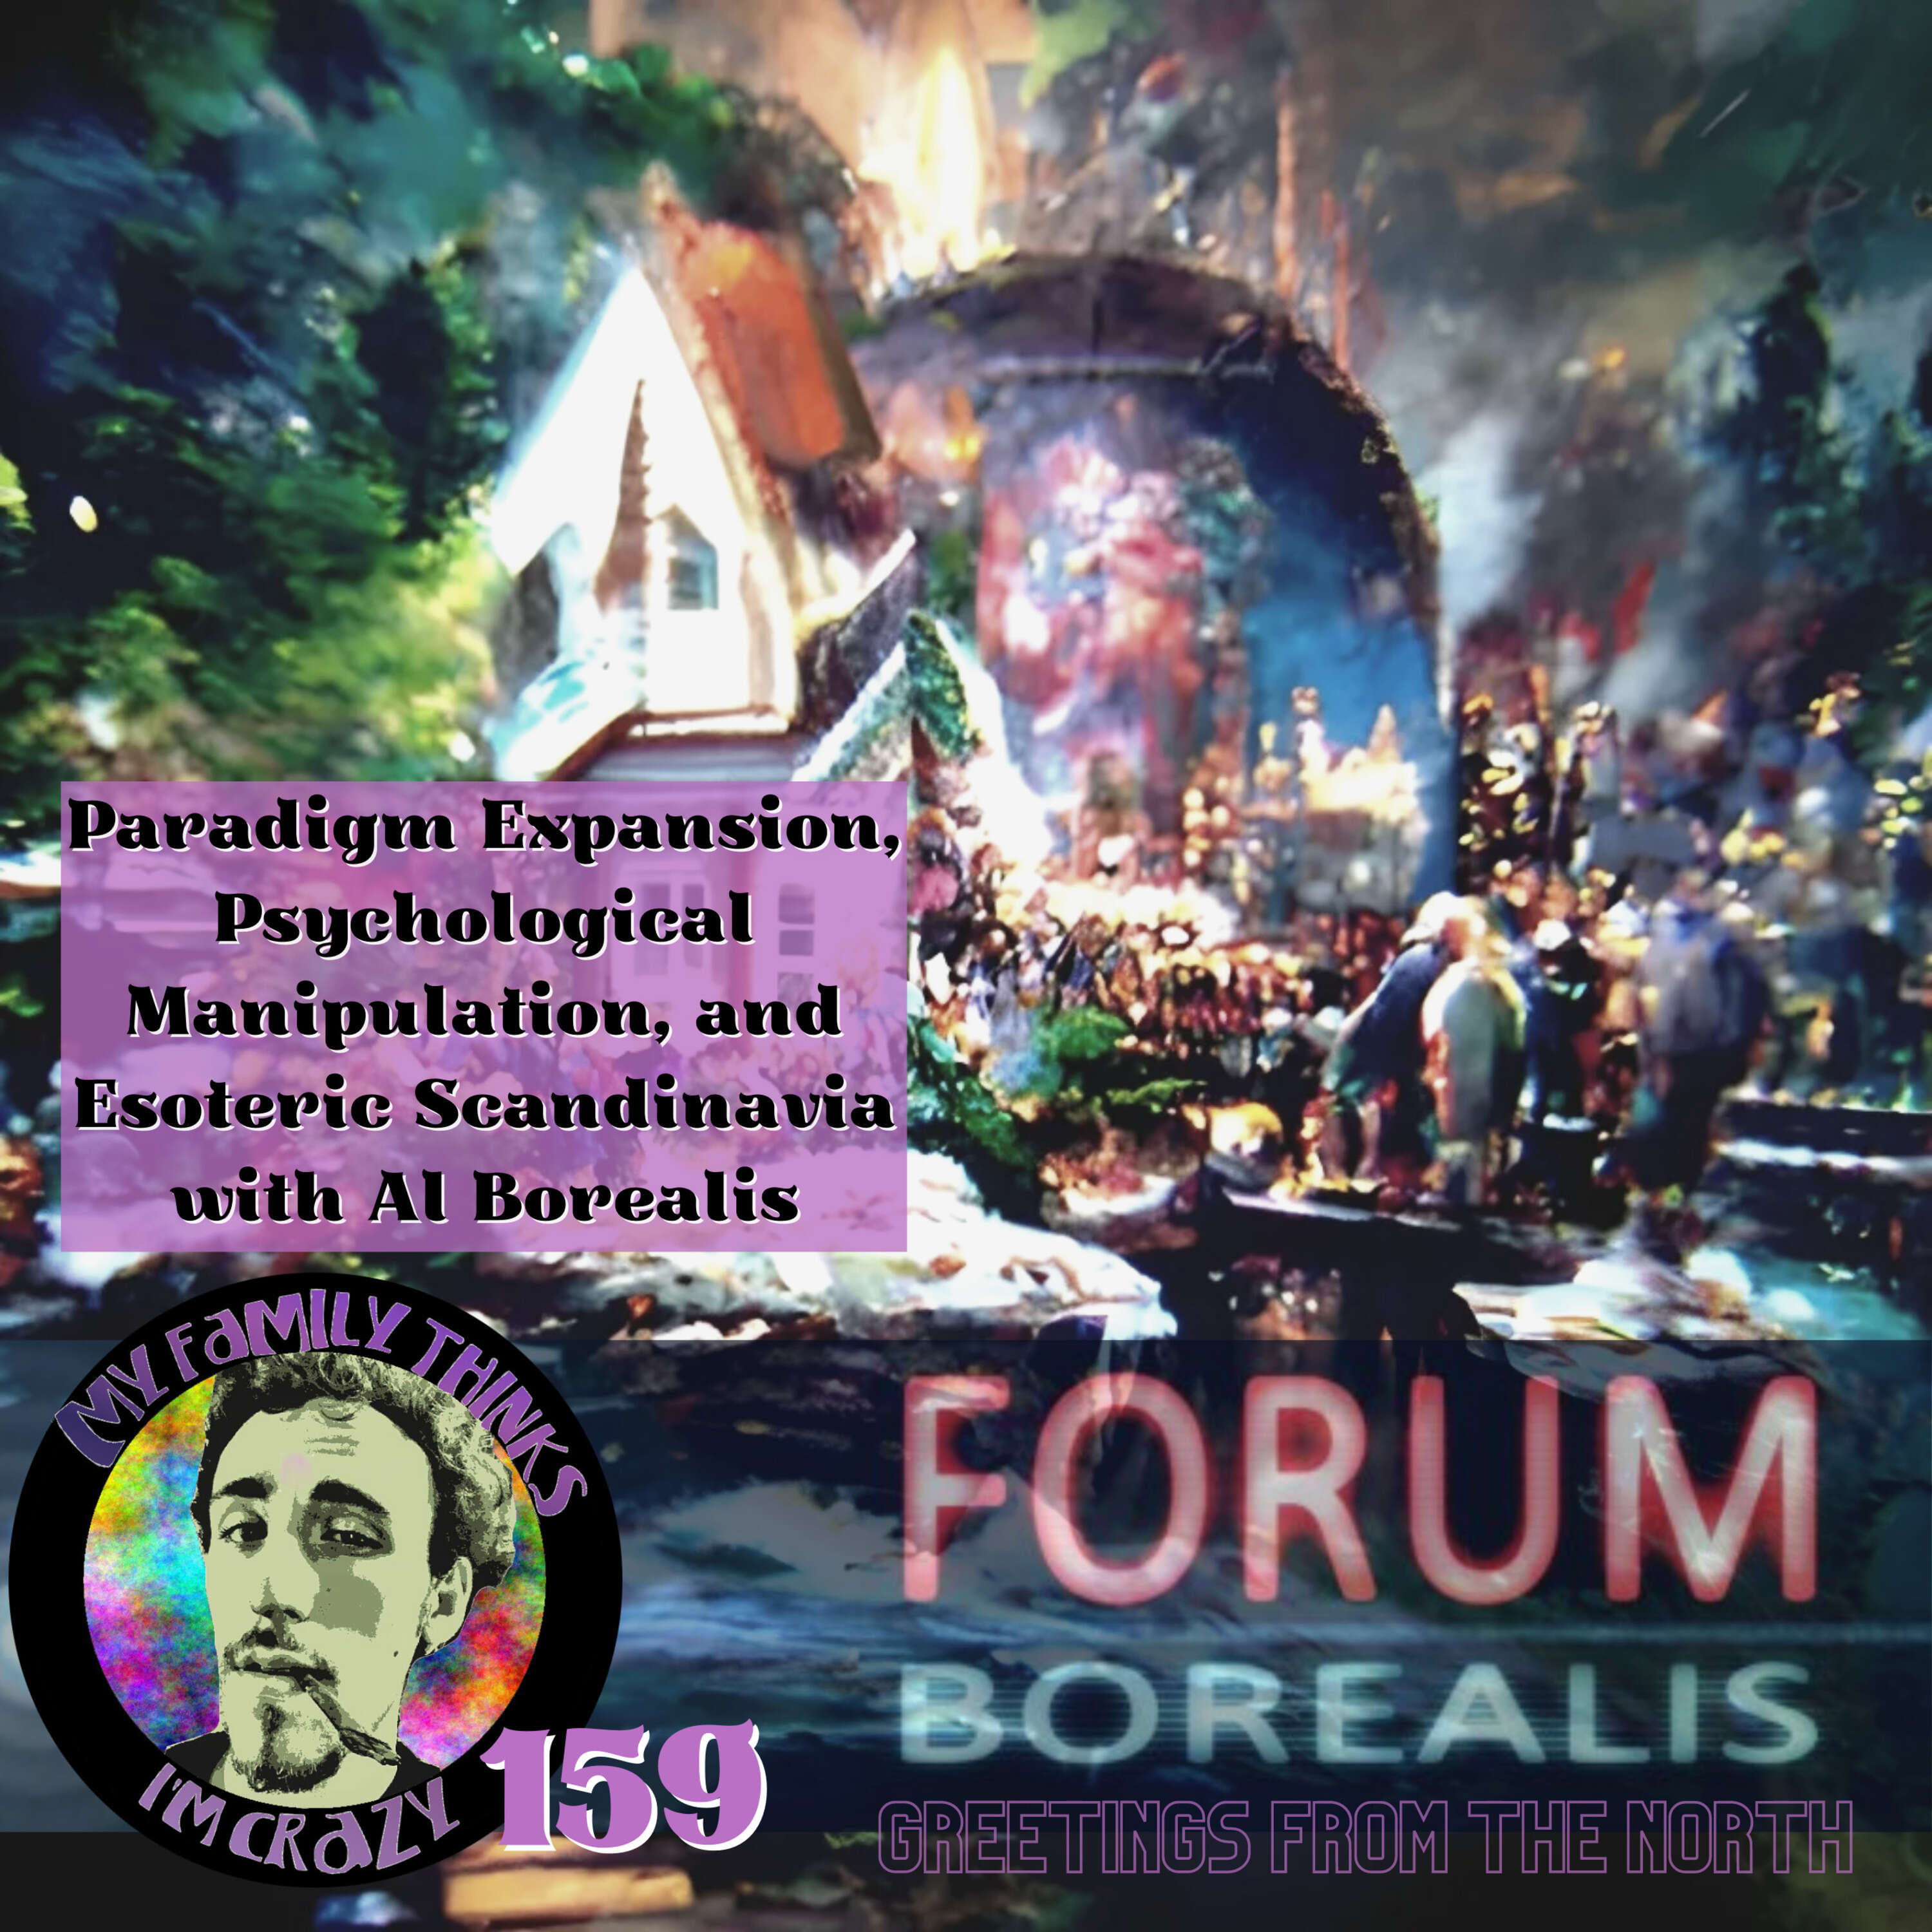 Forum Borealis - Al | Paradigm Expansion, Psychological Manipulation, and Esoteric Scandinavia